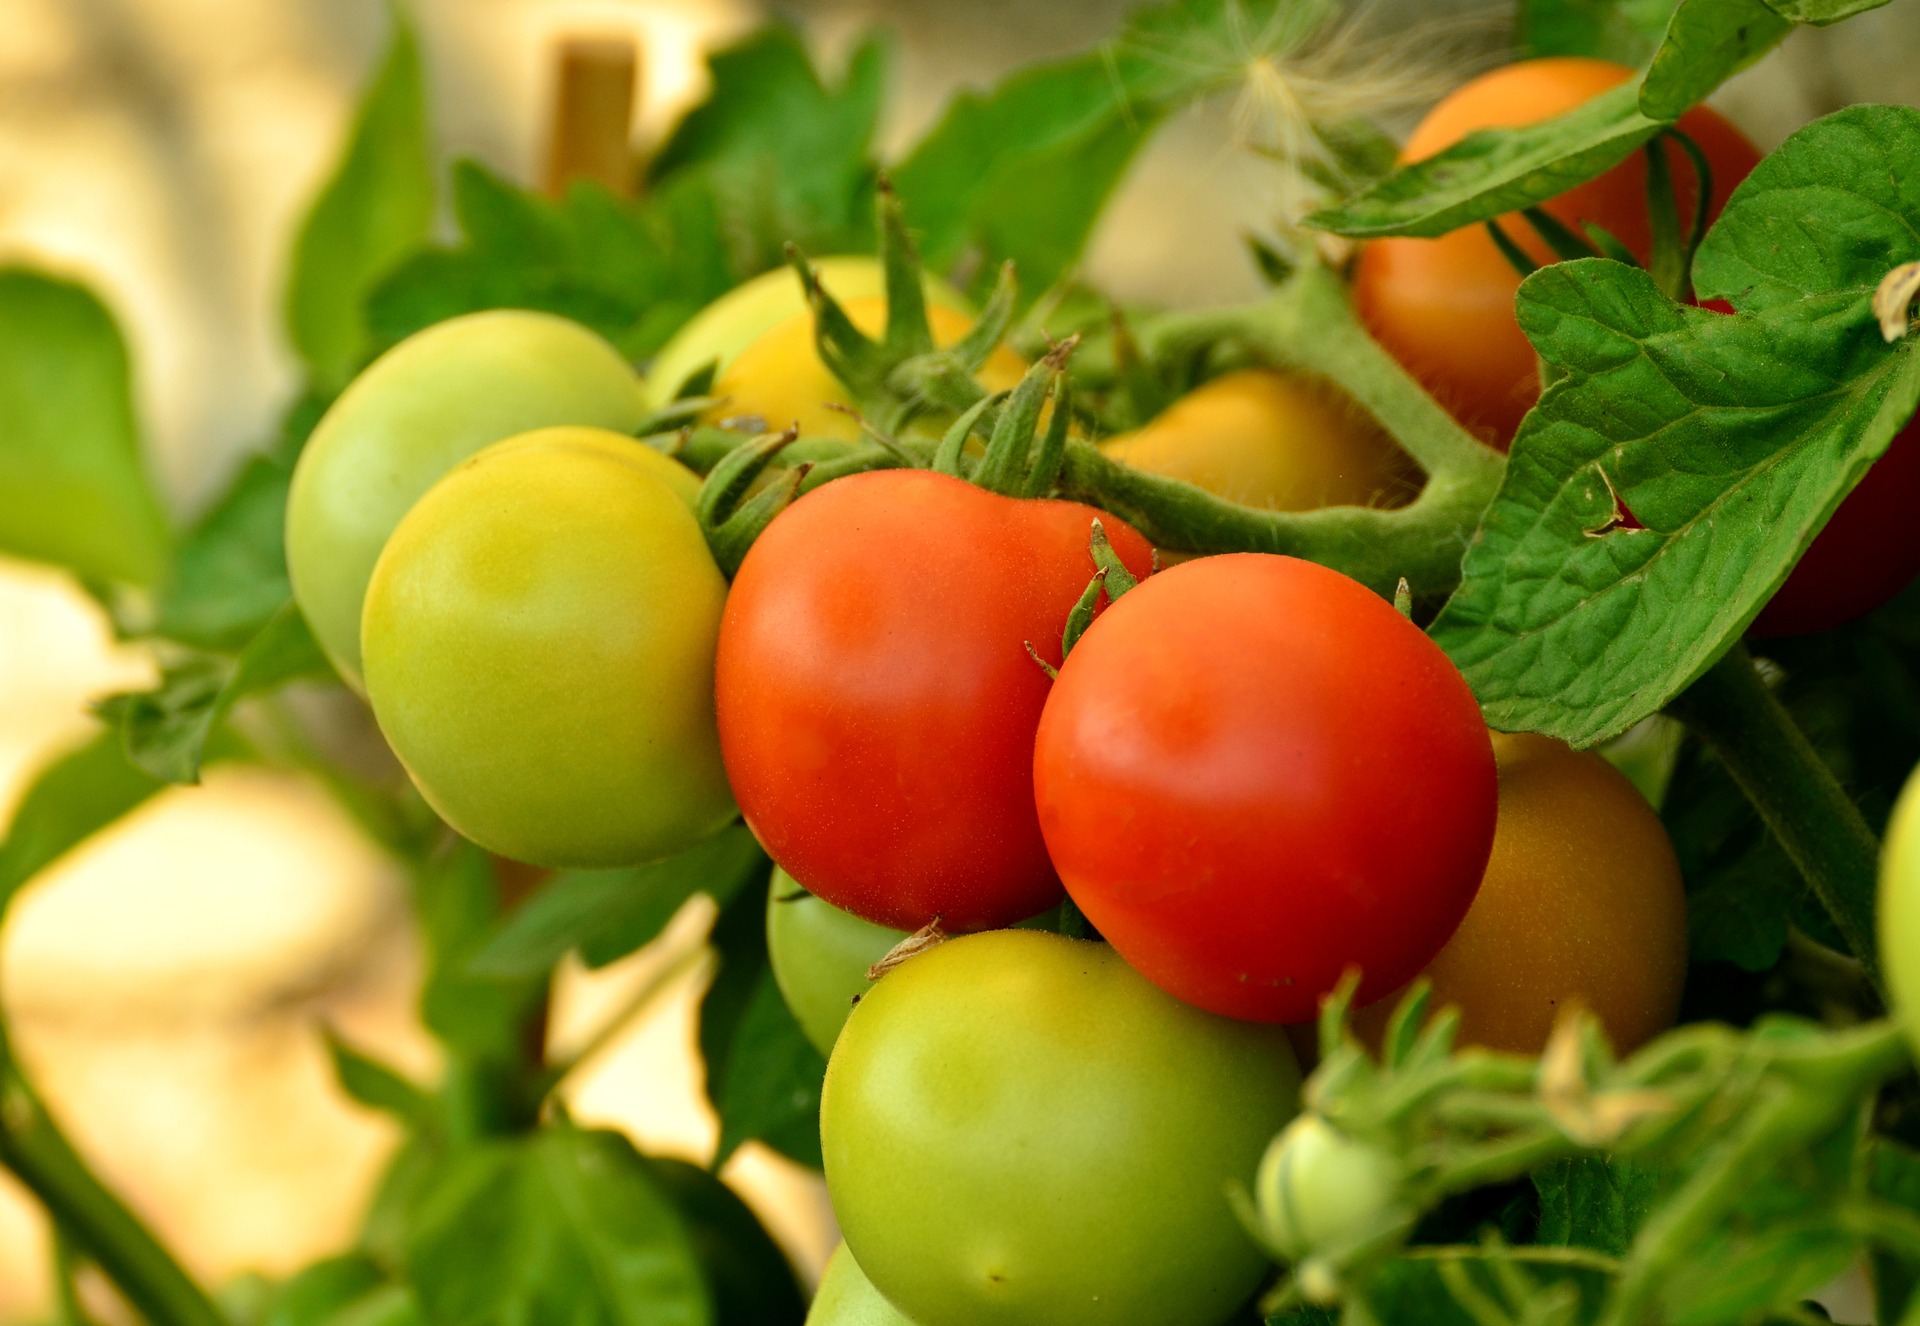 tomato-tone, growing tomatoes, organic gardening